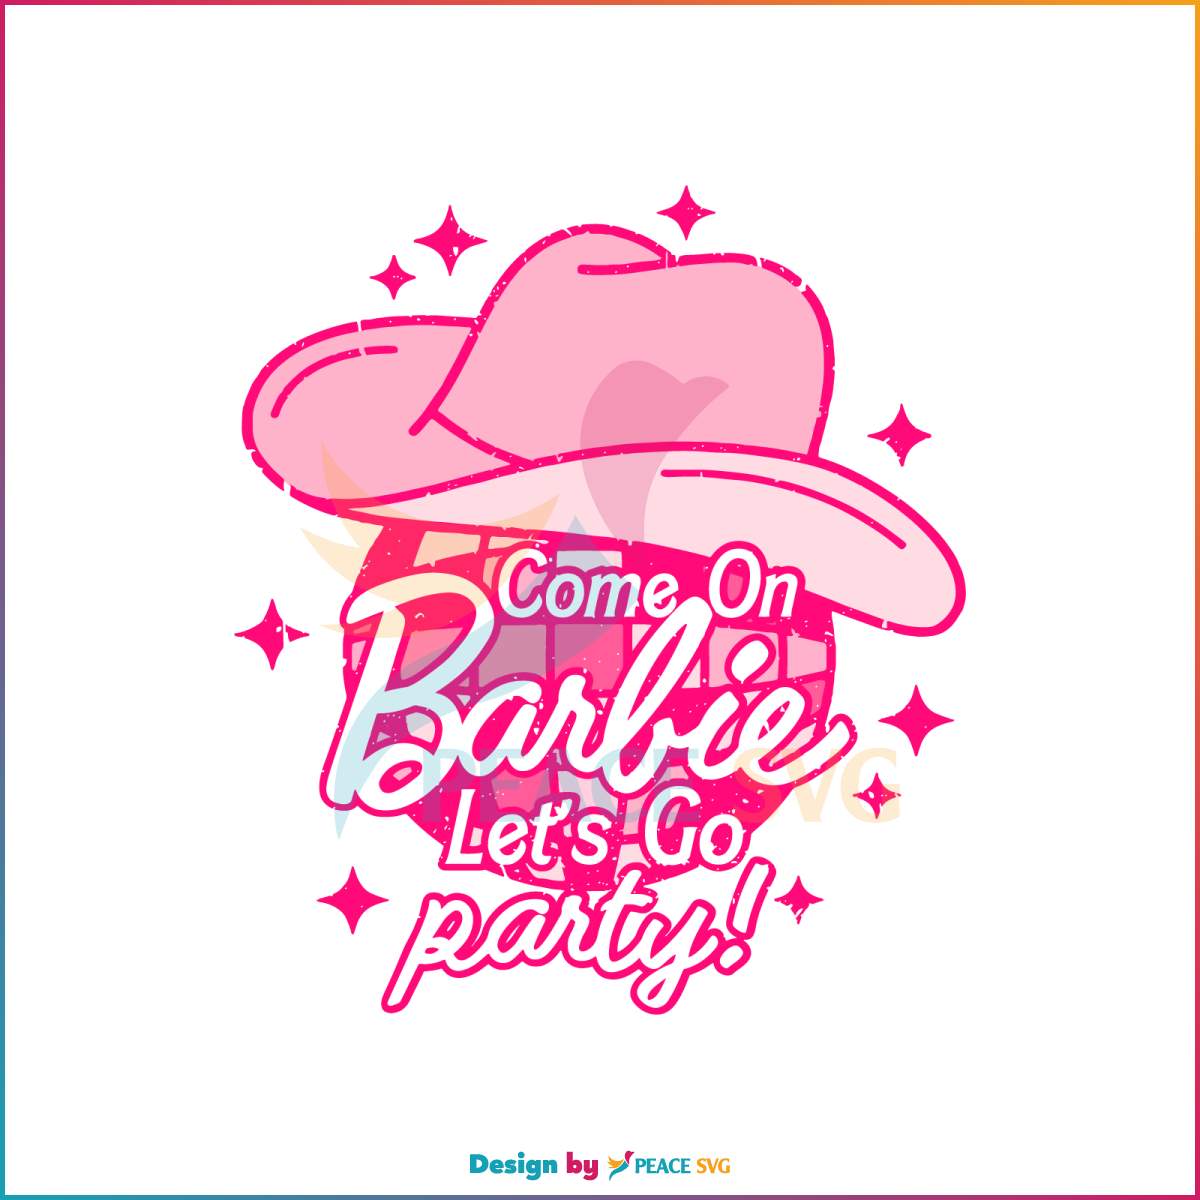 come-on-barbie-lets-go-party-svg-barbie-party-svg-digital-file